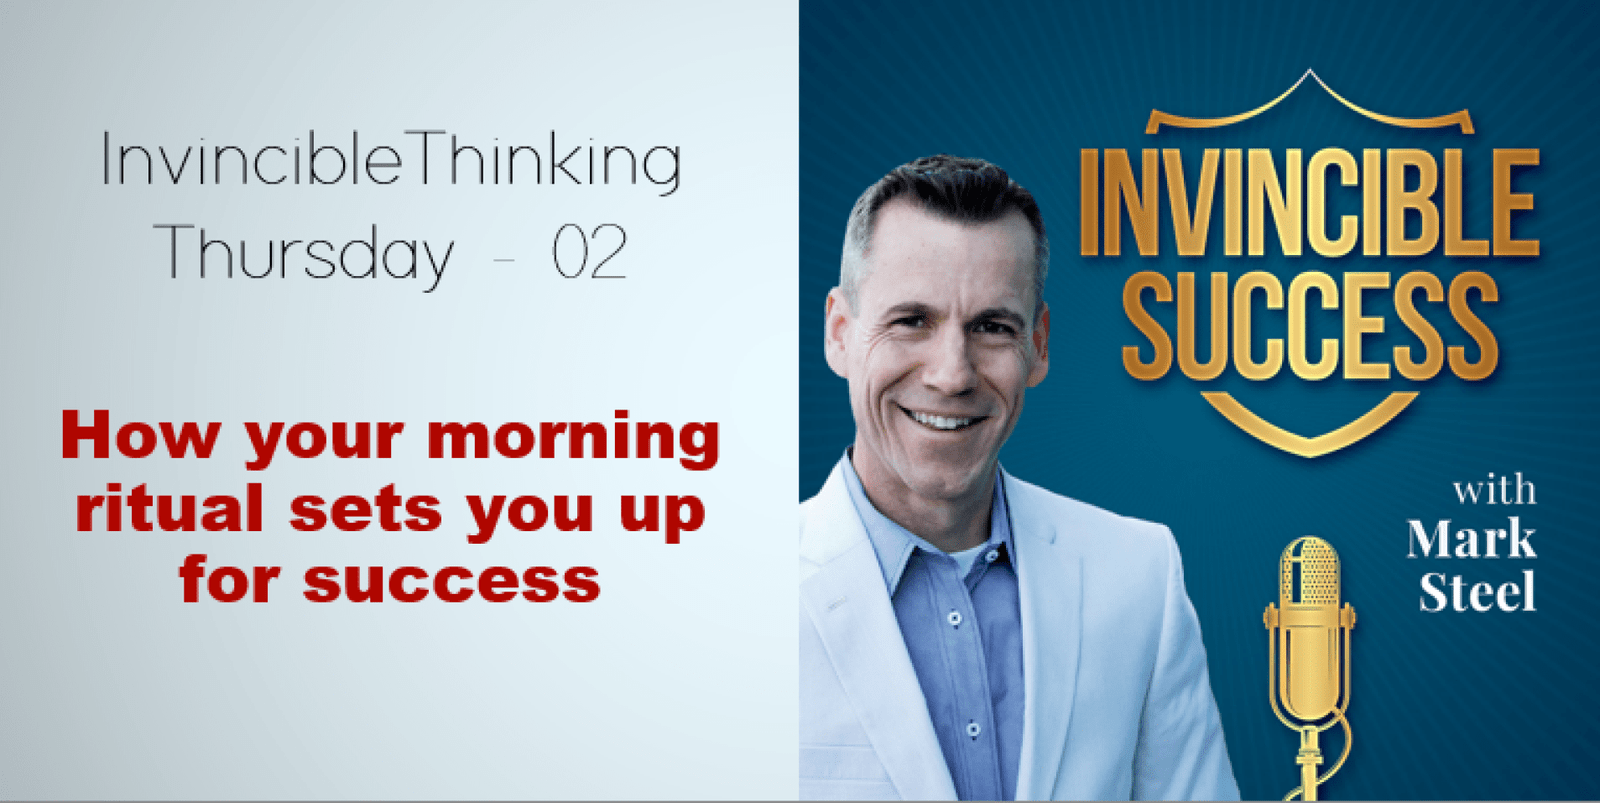 Invincible Success Podcast - Invincible Thinking Thursday - Episode 02